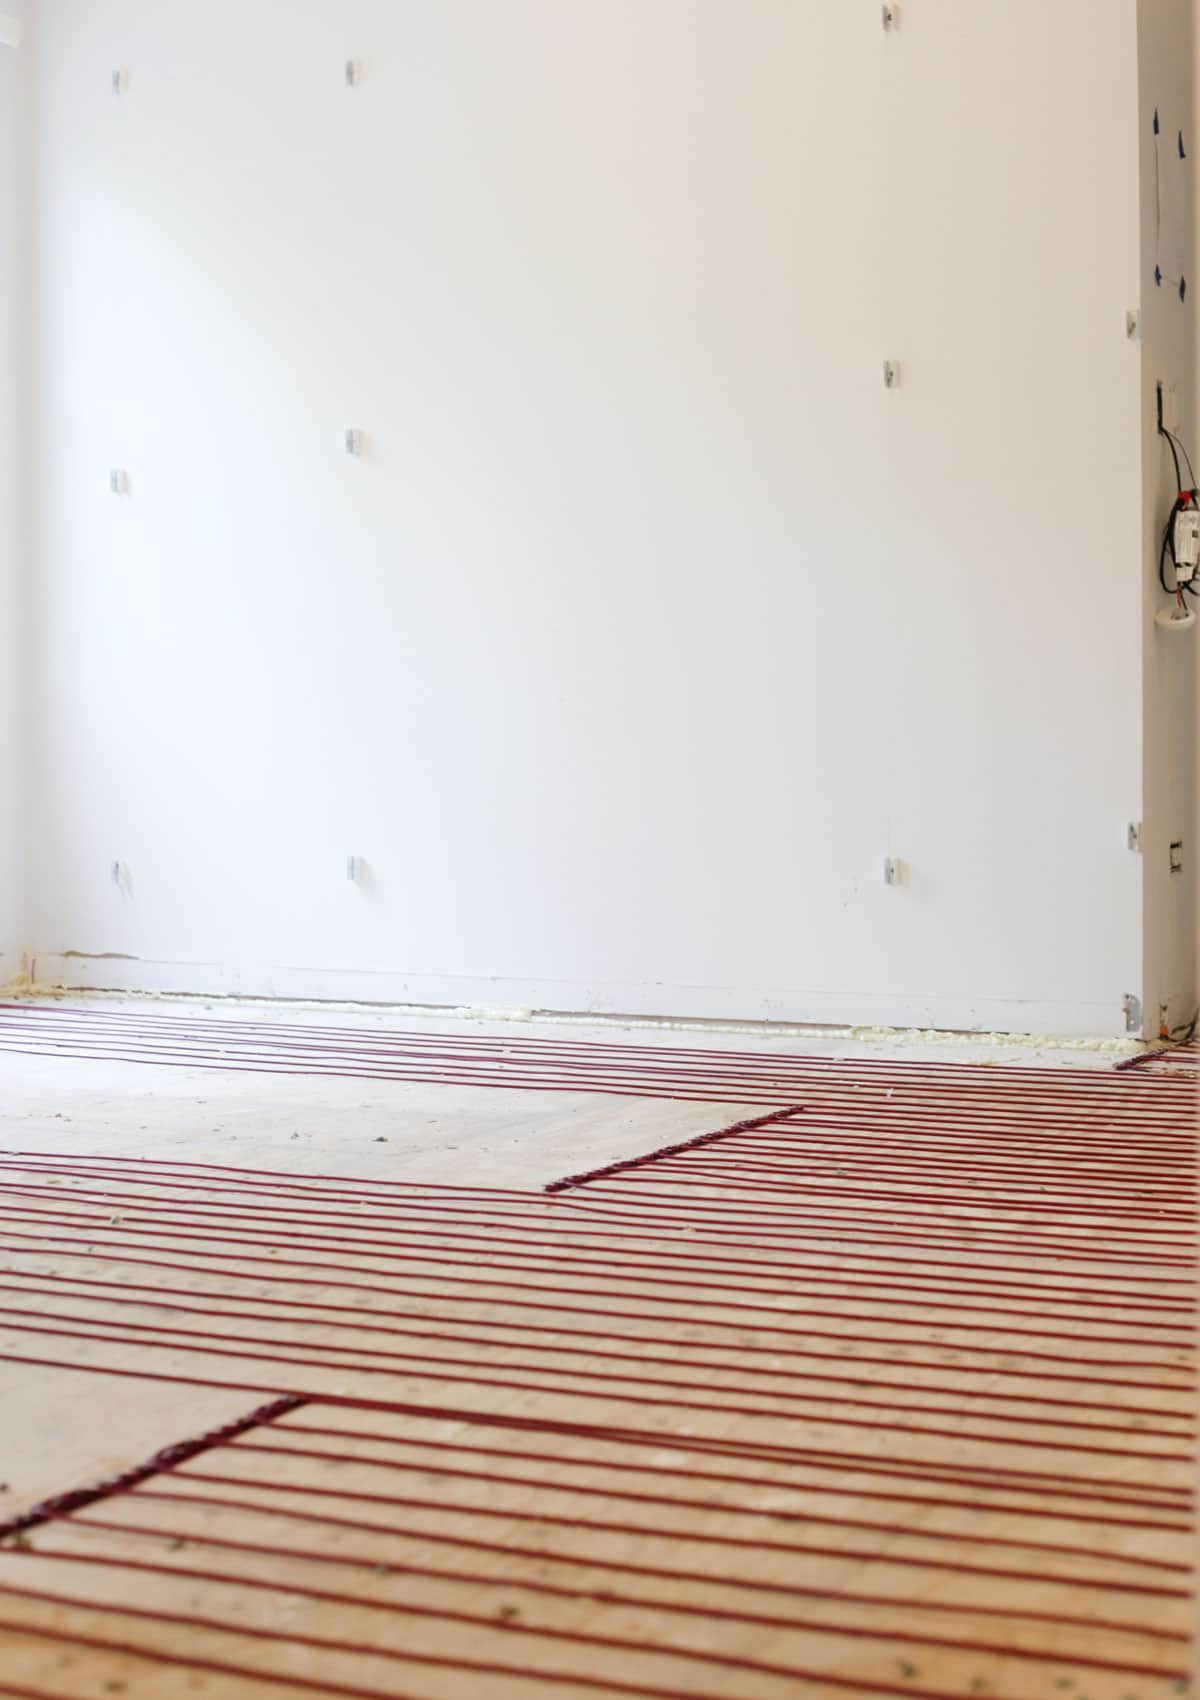 Heated floor installation from WarmlyYours radiant heat install in walk-in closet renovation